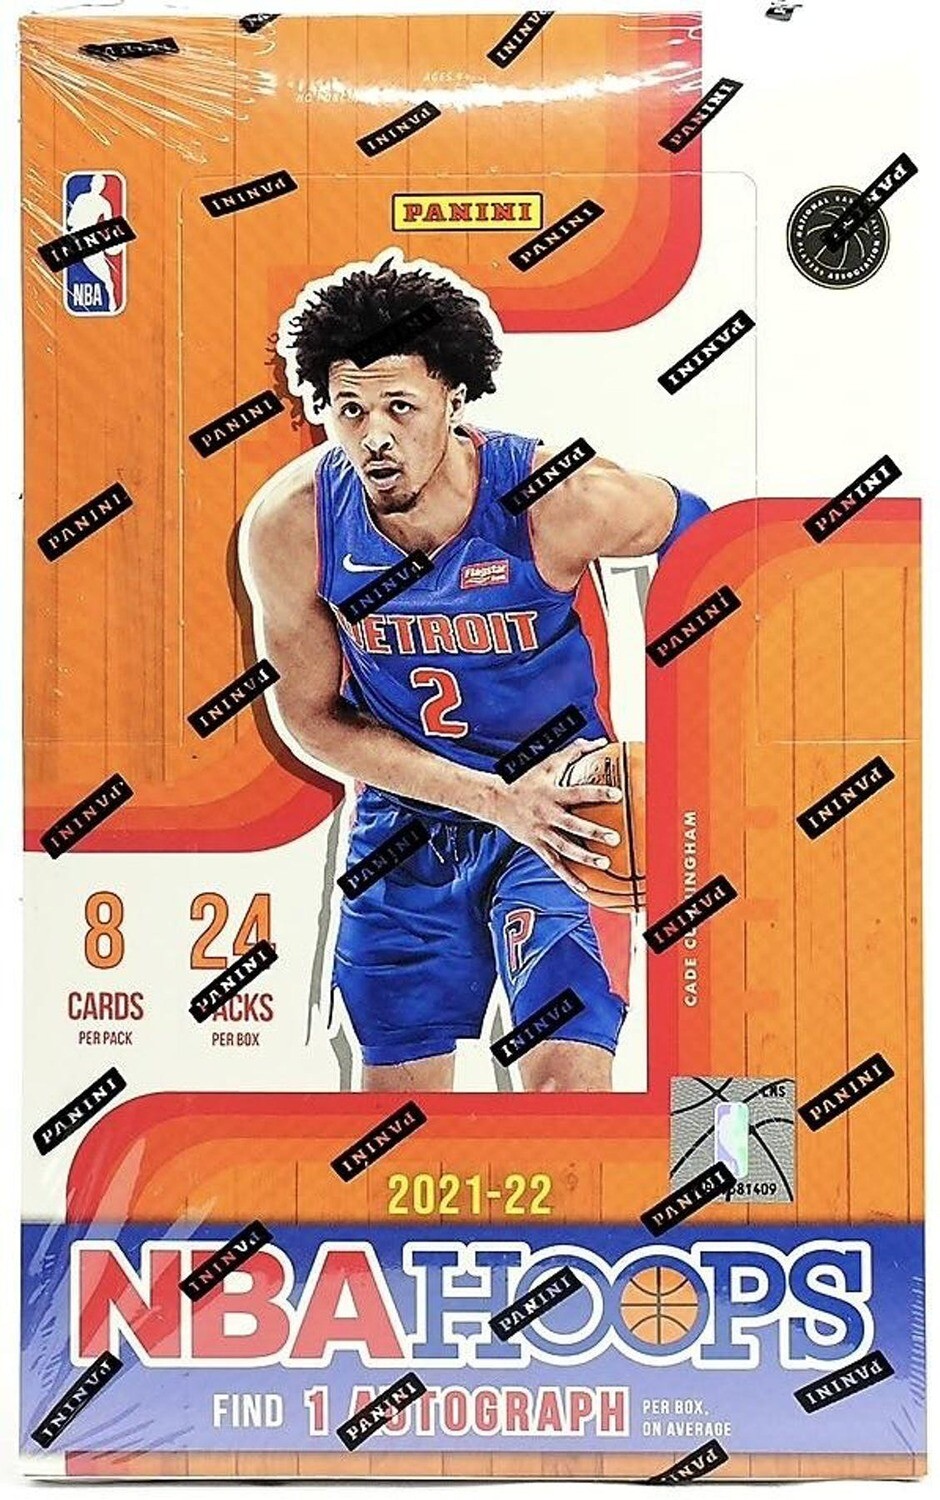 2021/22 NBA Hoops Hobby Box